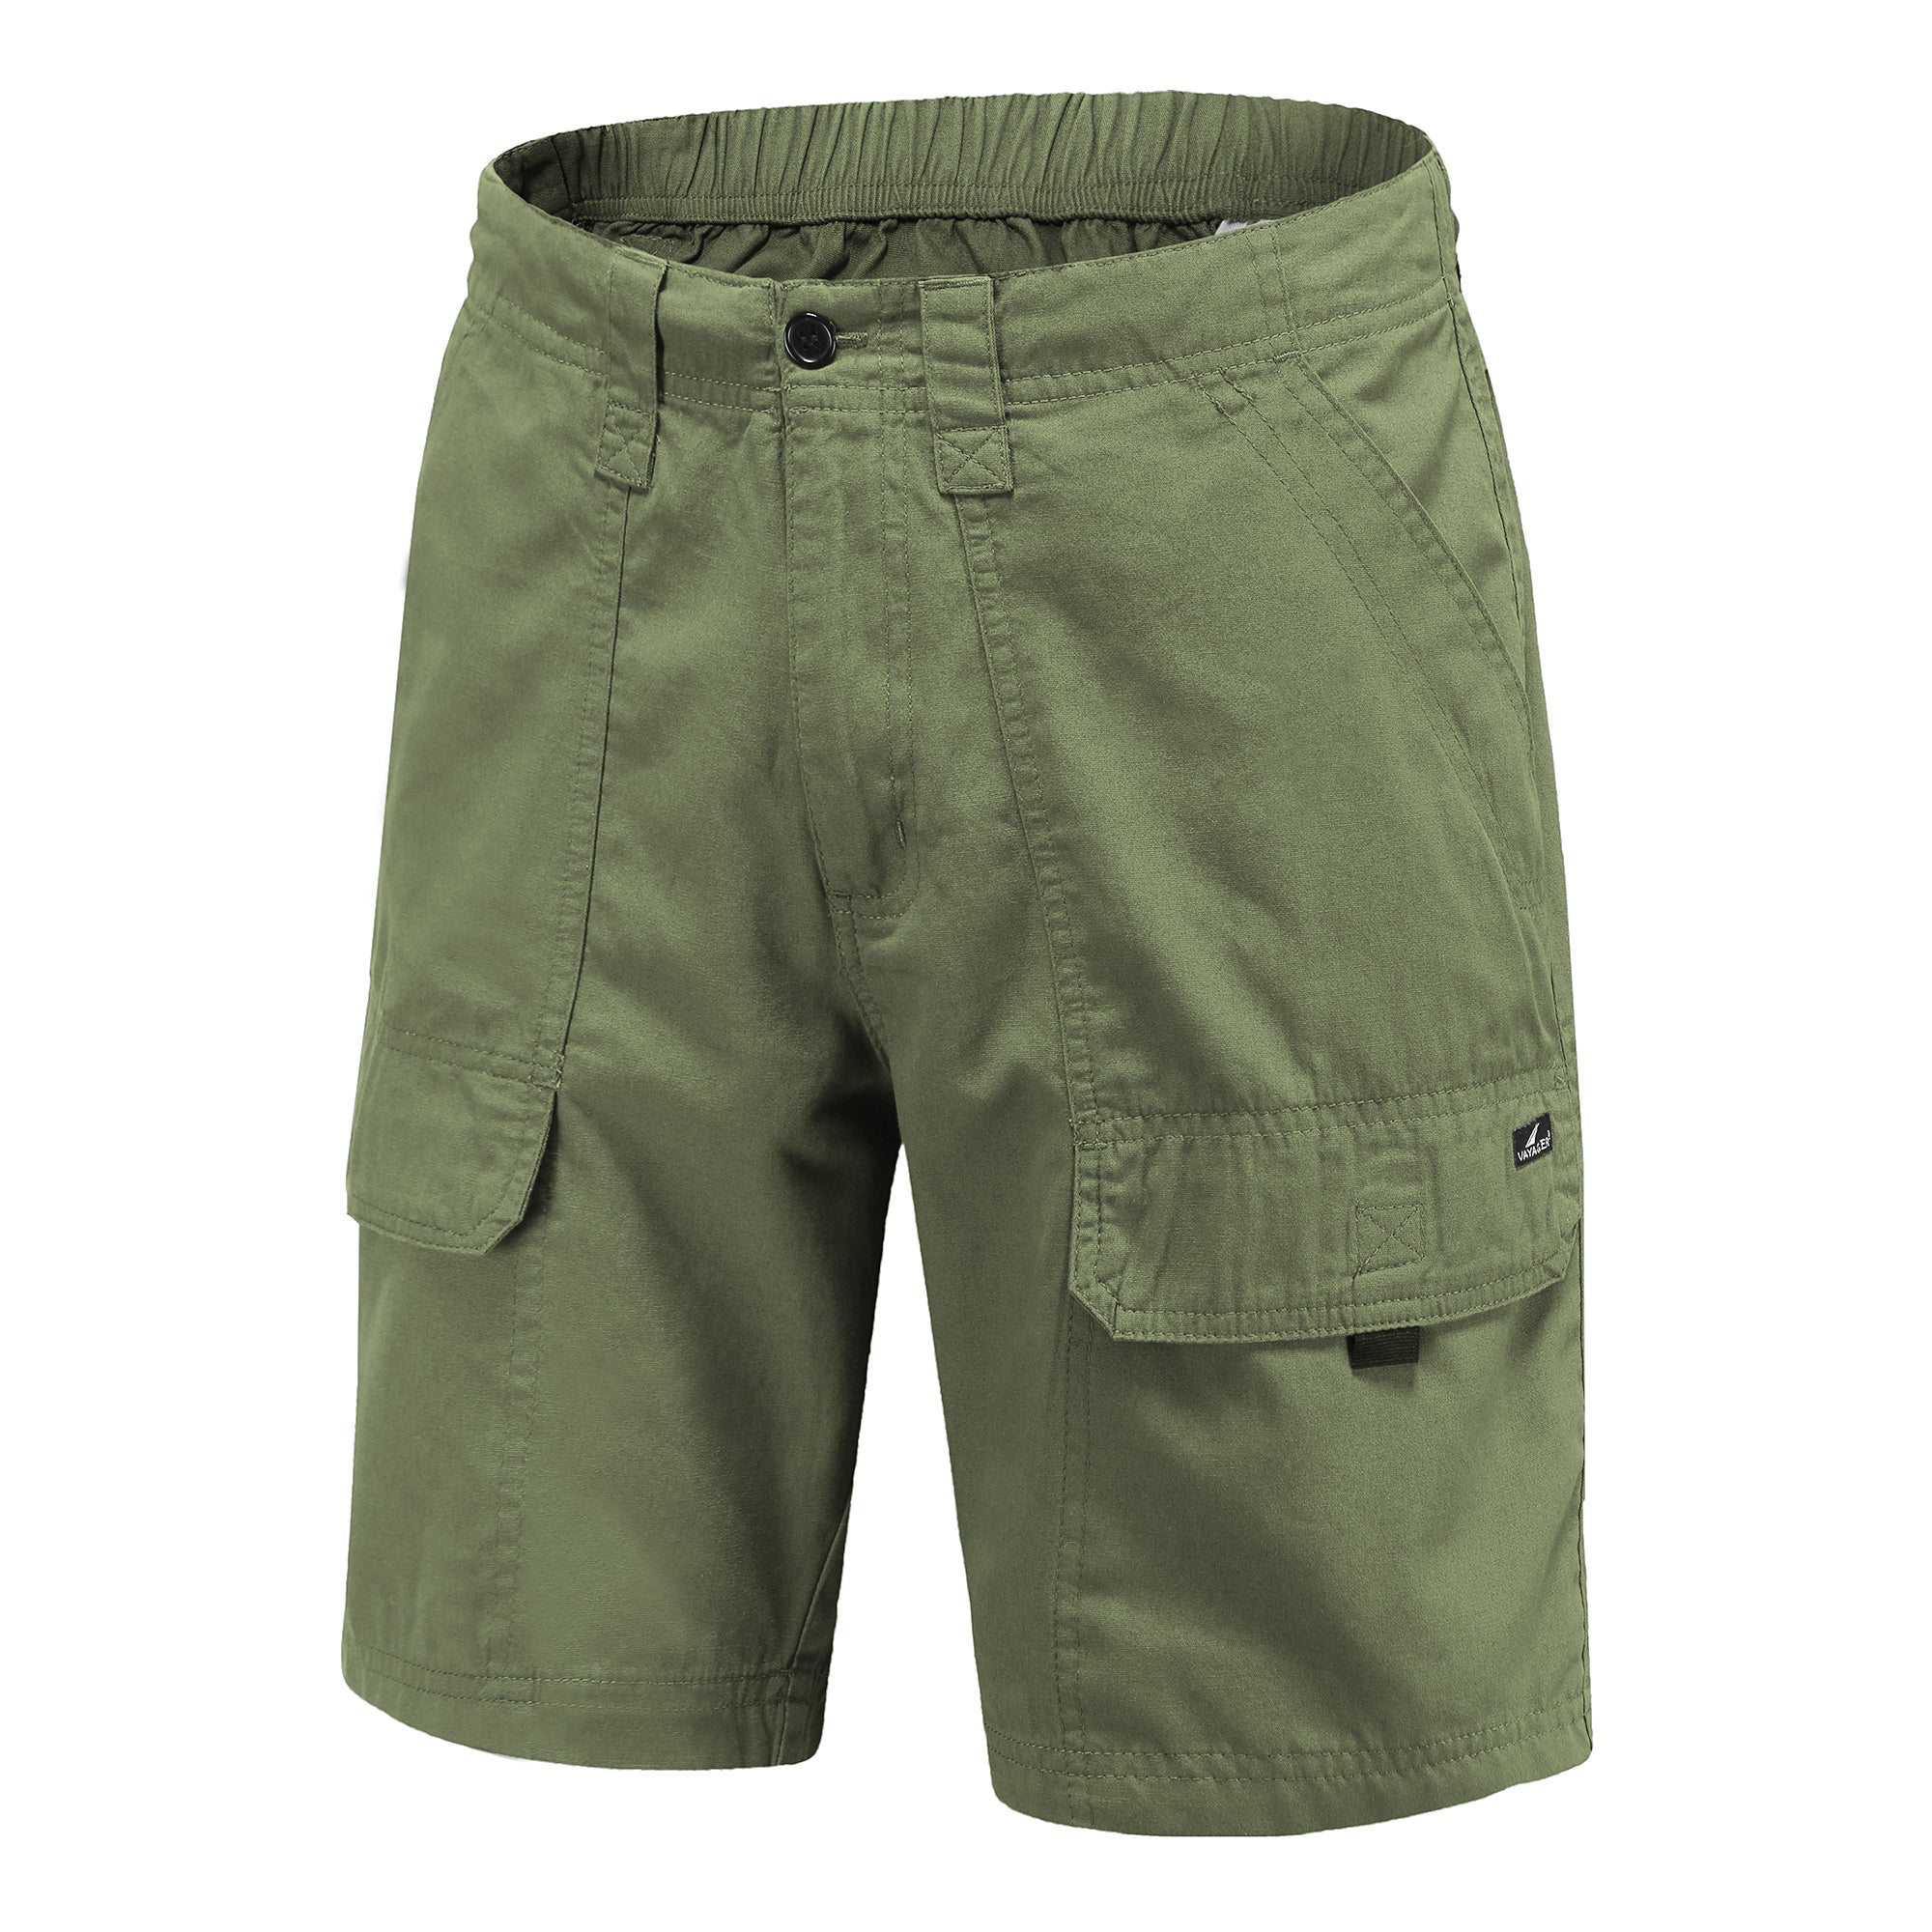 Men's Cargo Shorts 100% Cotton Lightweight Multi Pocket Casual Outdoor Hiking Shorts